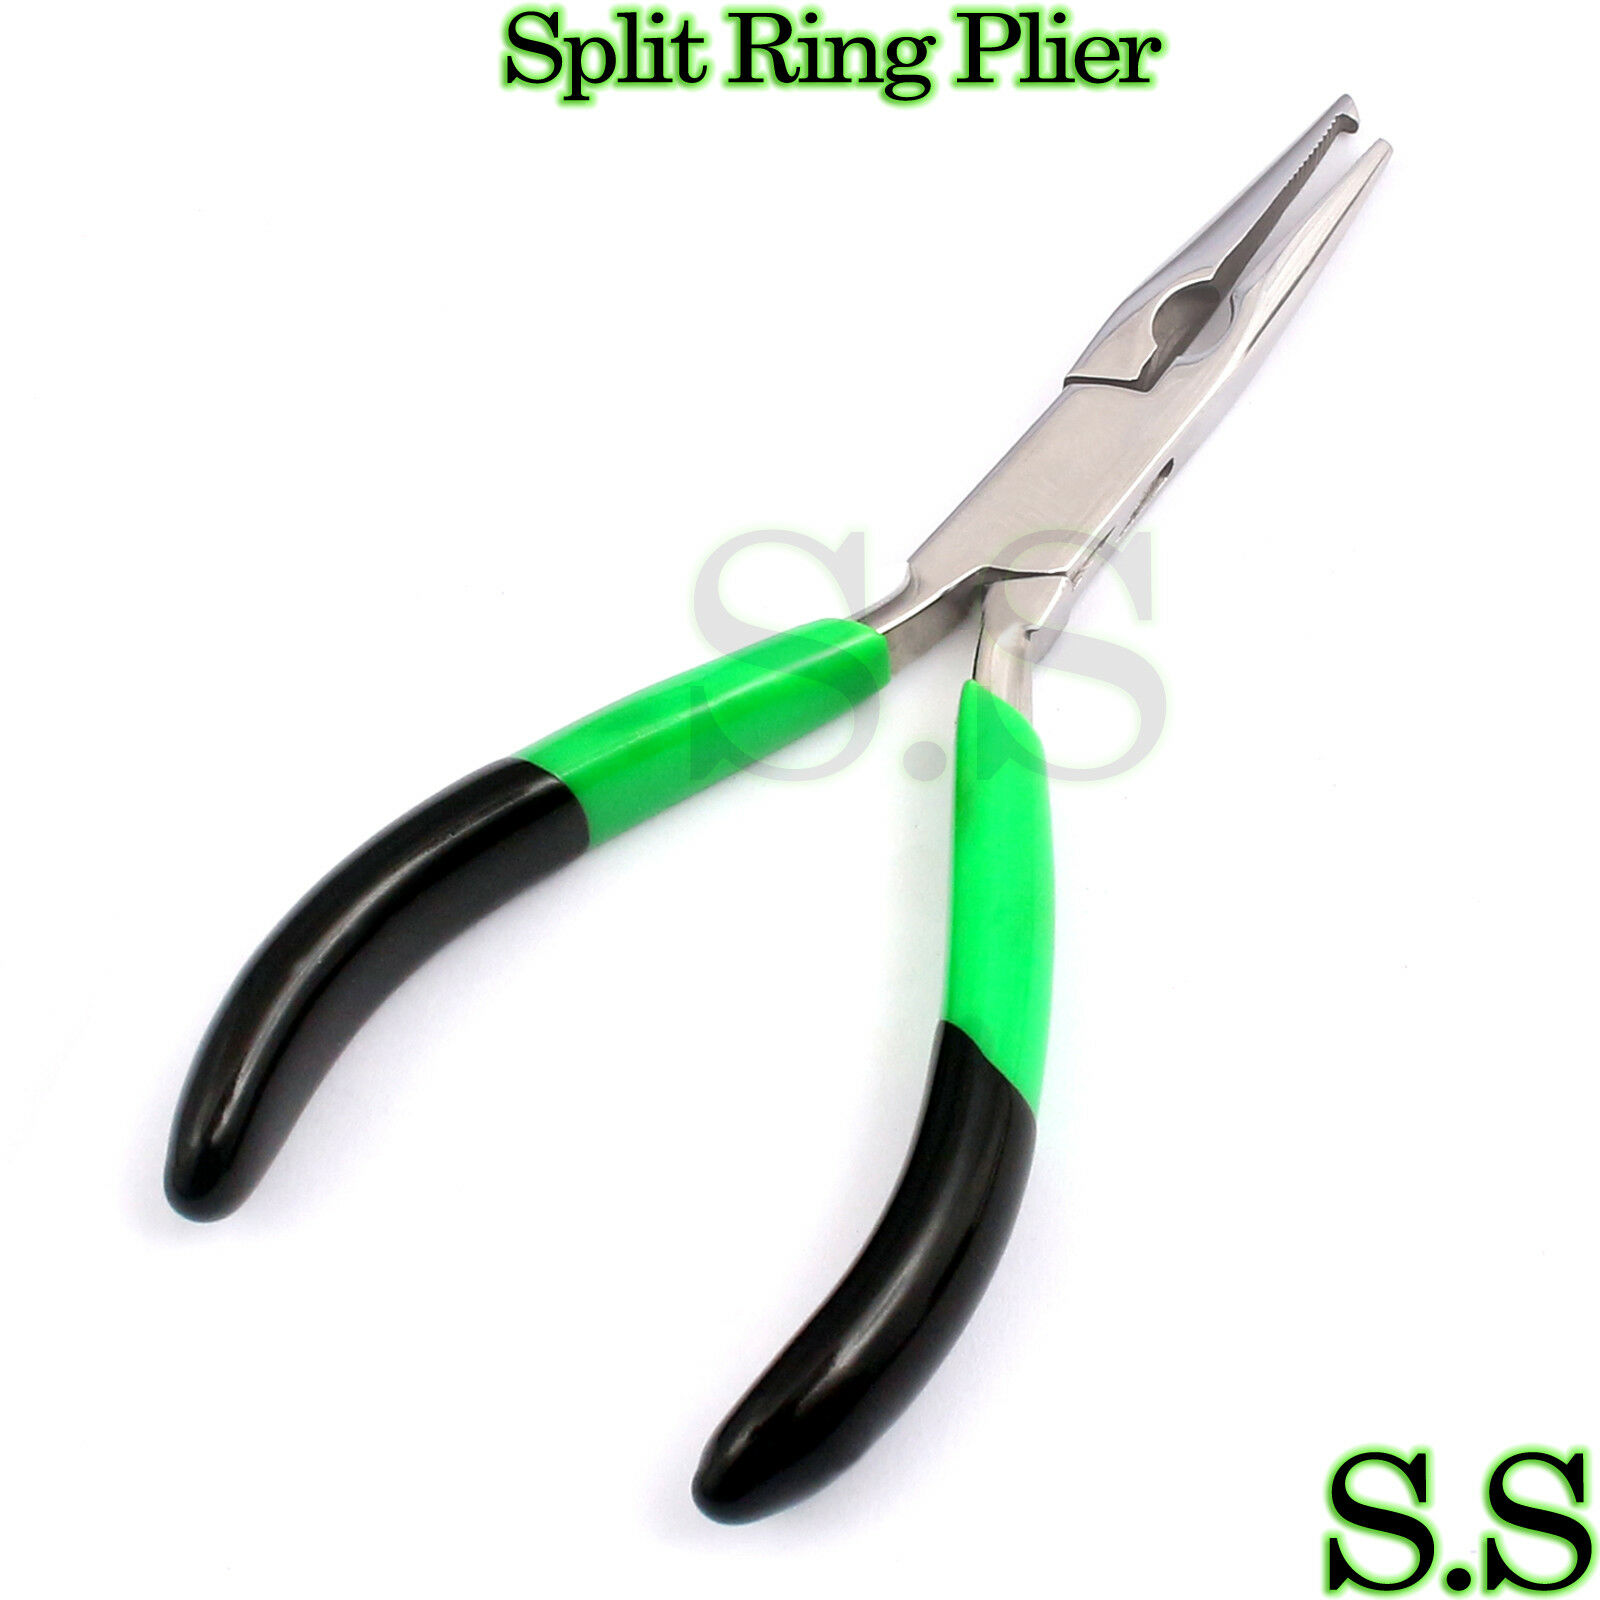 Split Ring Plier With Green & Black 5.5" New Brand